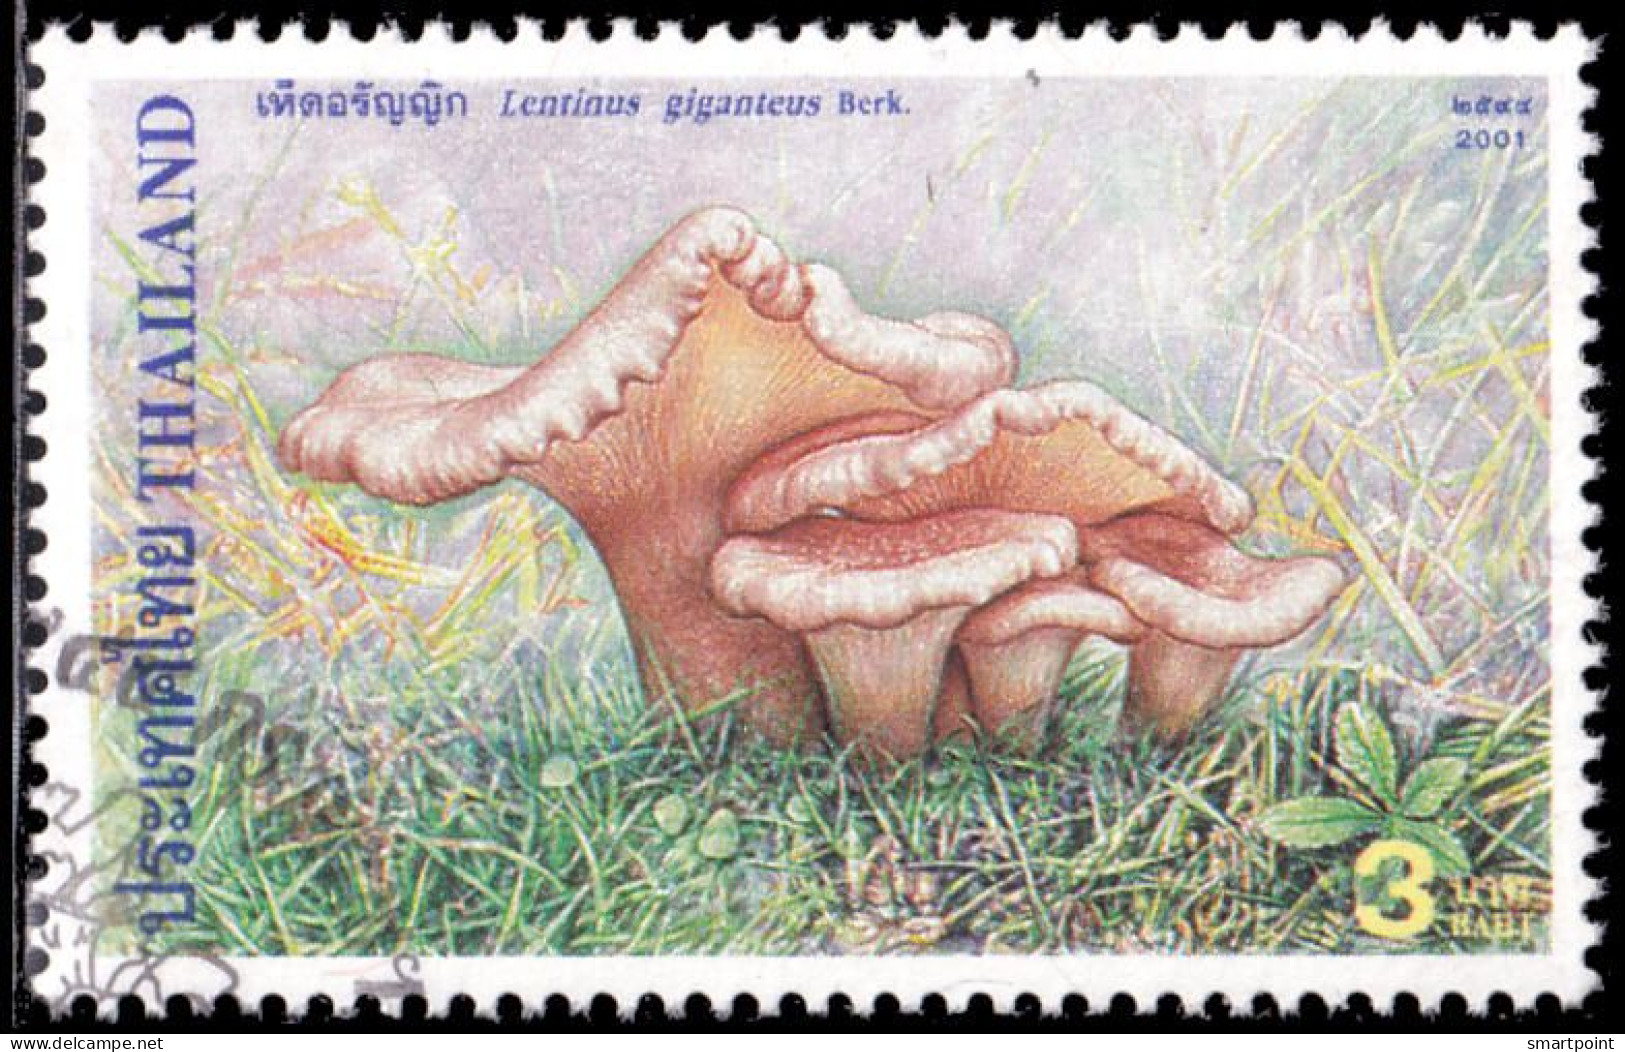 Thailand Stamp 2001 Mushrooms (3rd Series) 3 Baht - Used - Thailand